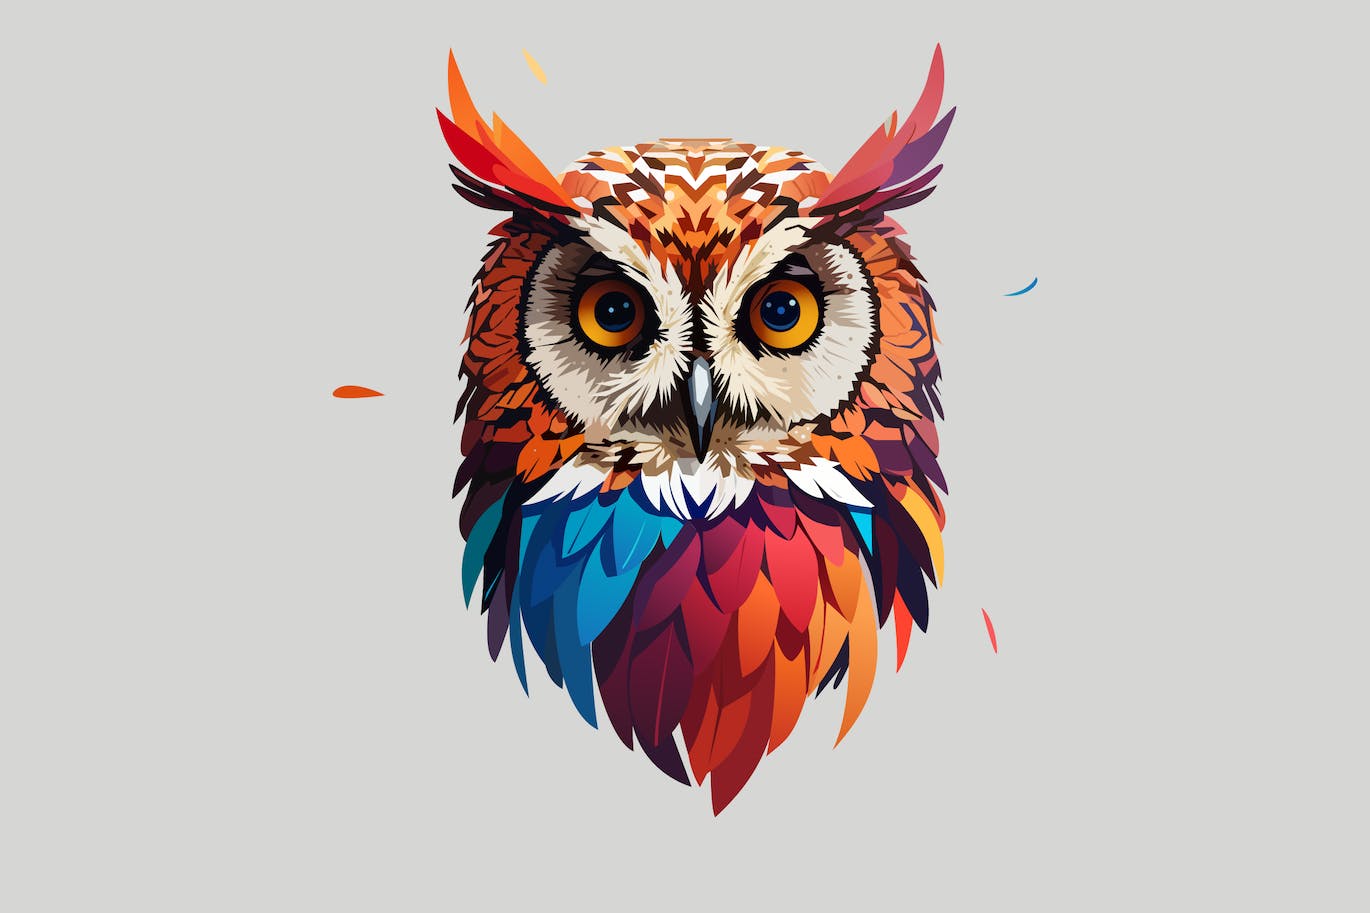 彩色羽毛猫头鹰矢量插画 bright abstract bird owl with feathers-1